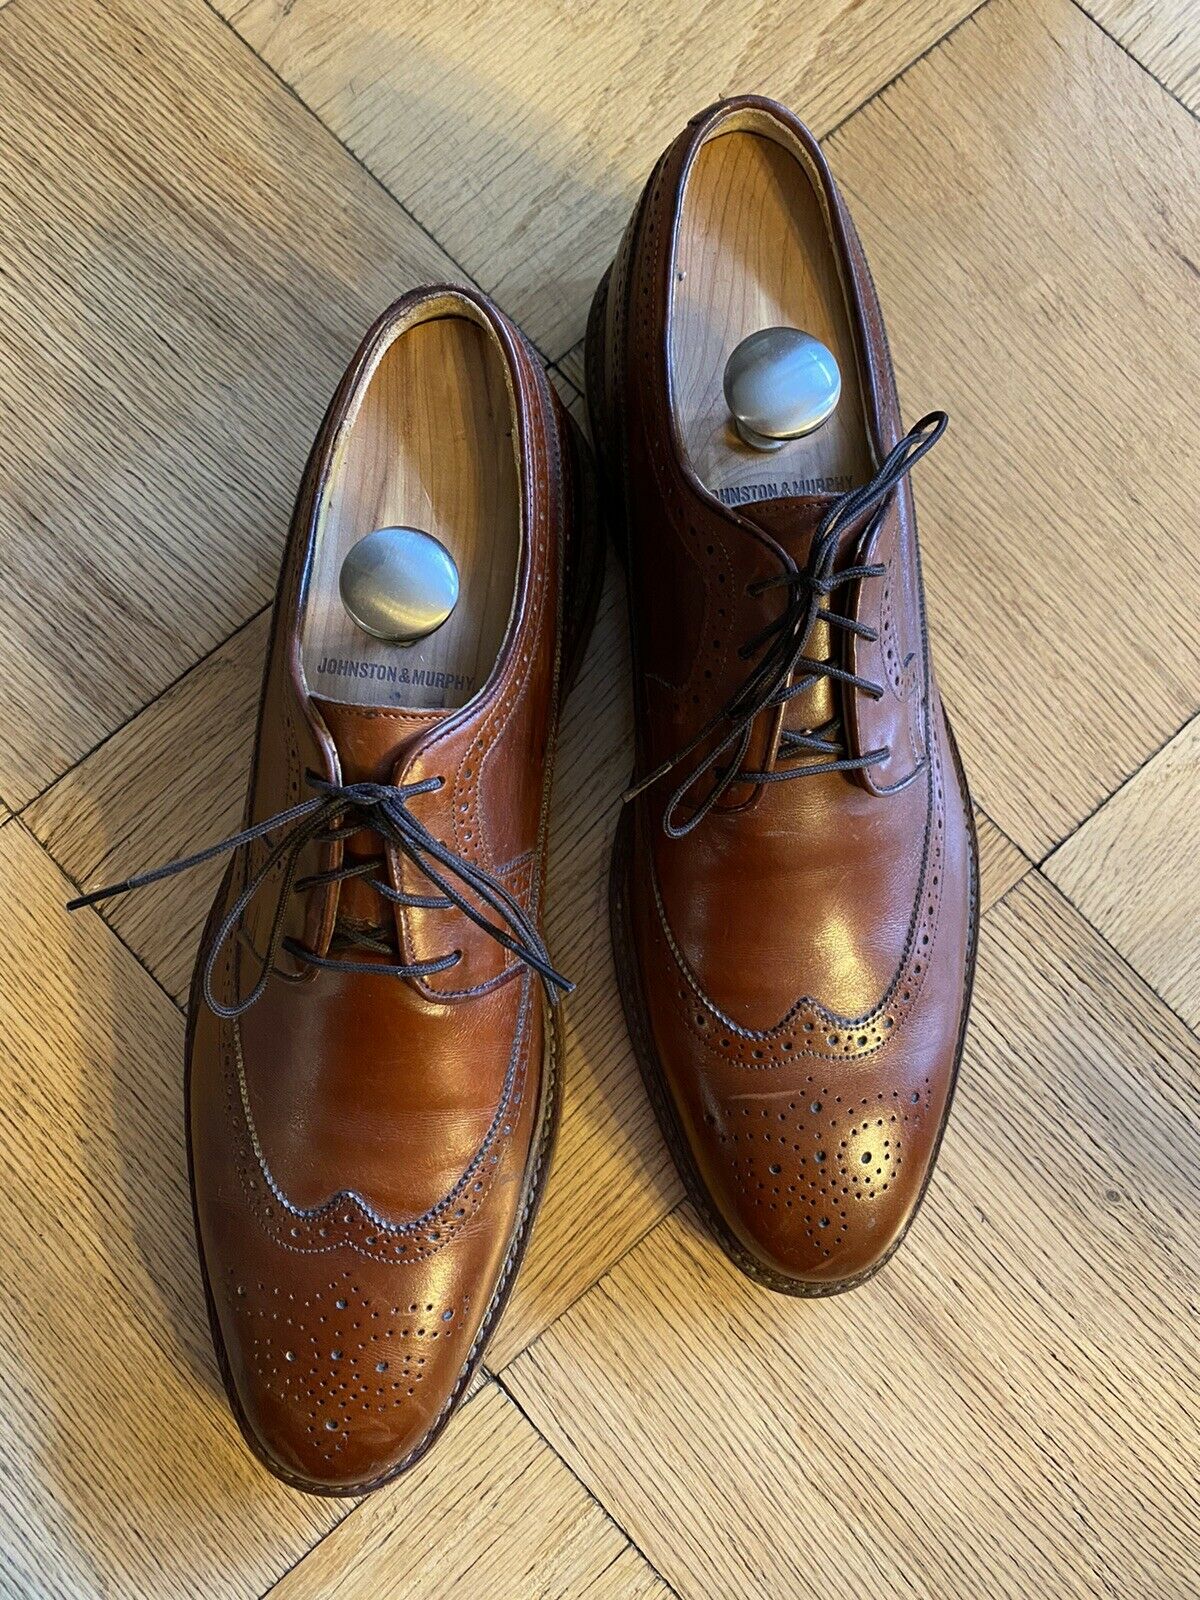 Johnston & Murphy Wingtip Dress Shoes Men’s 11 Longwing Cognac Leather